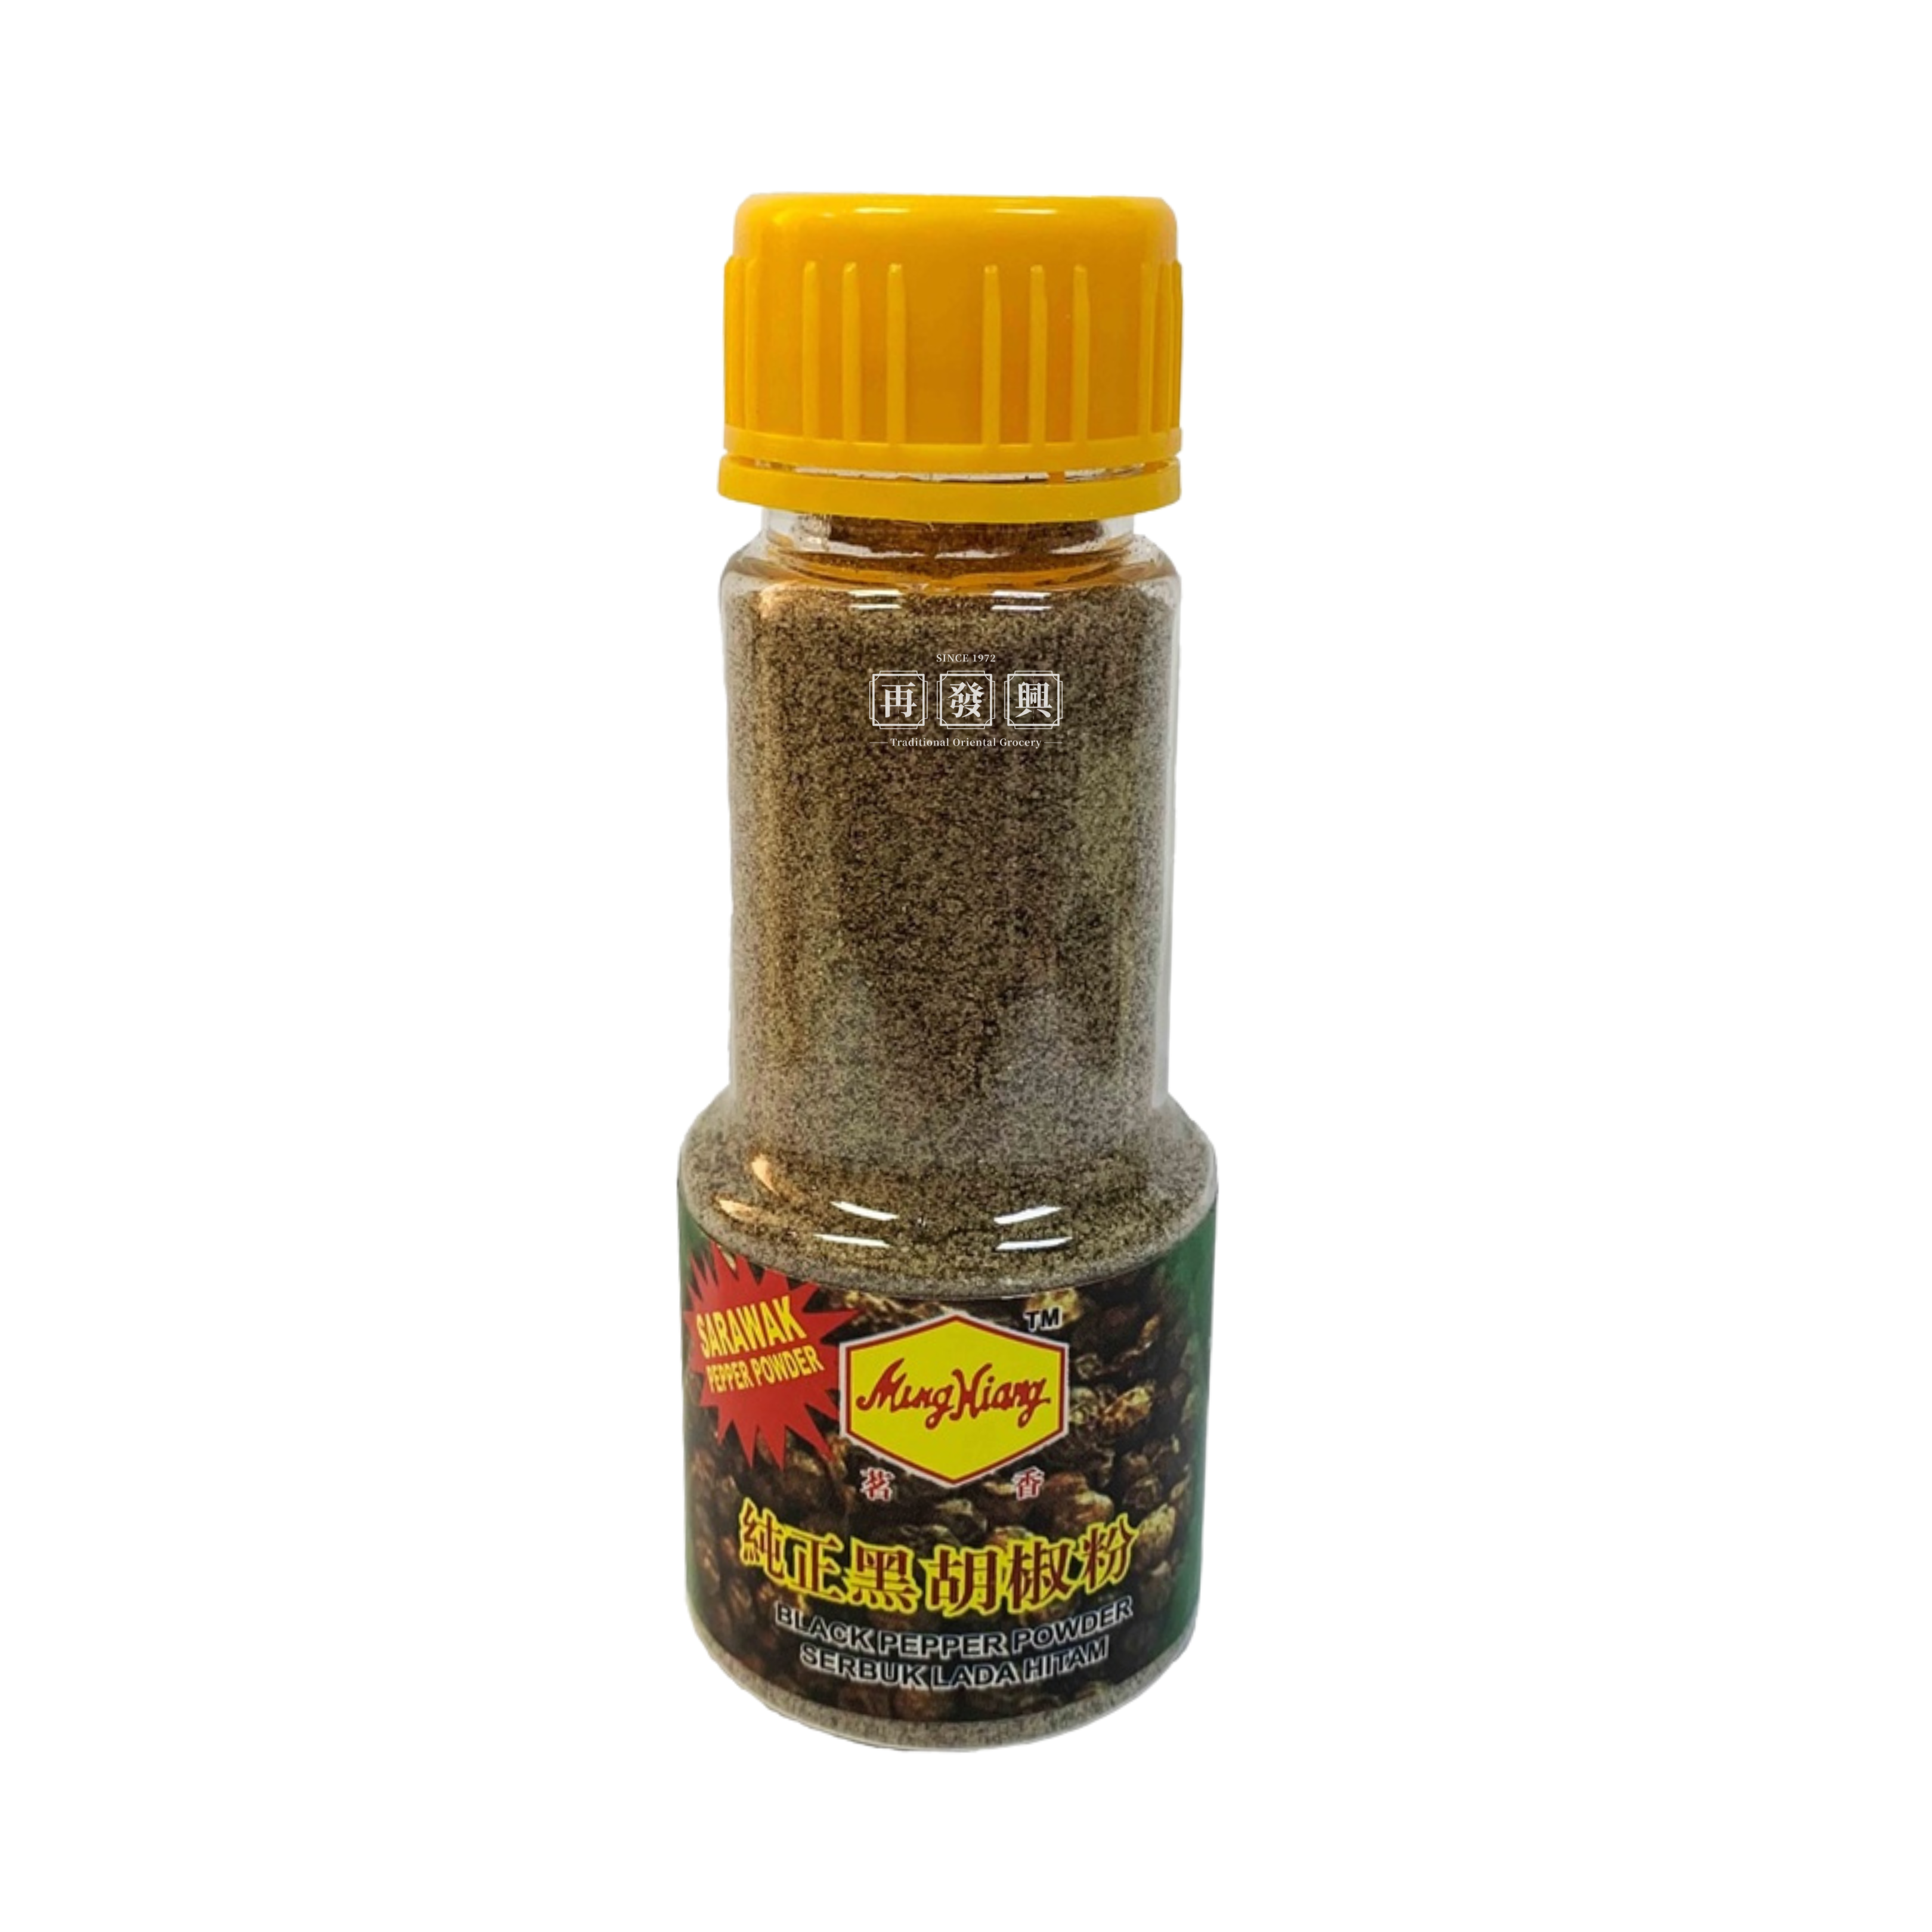 Ming Xiang Black Pepper Powder 50g